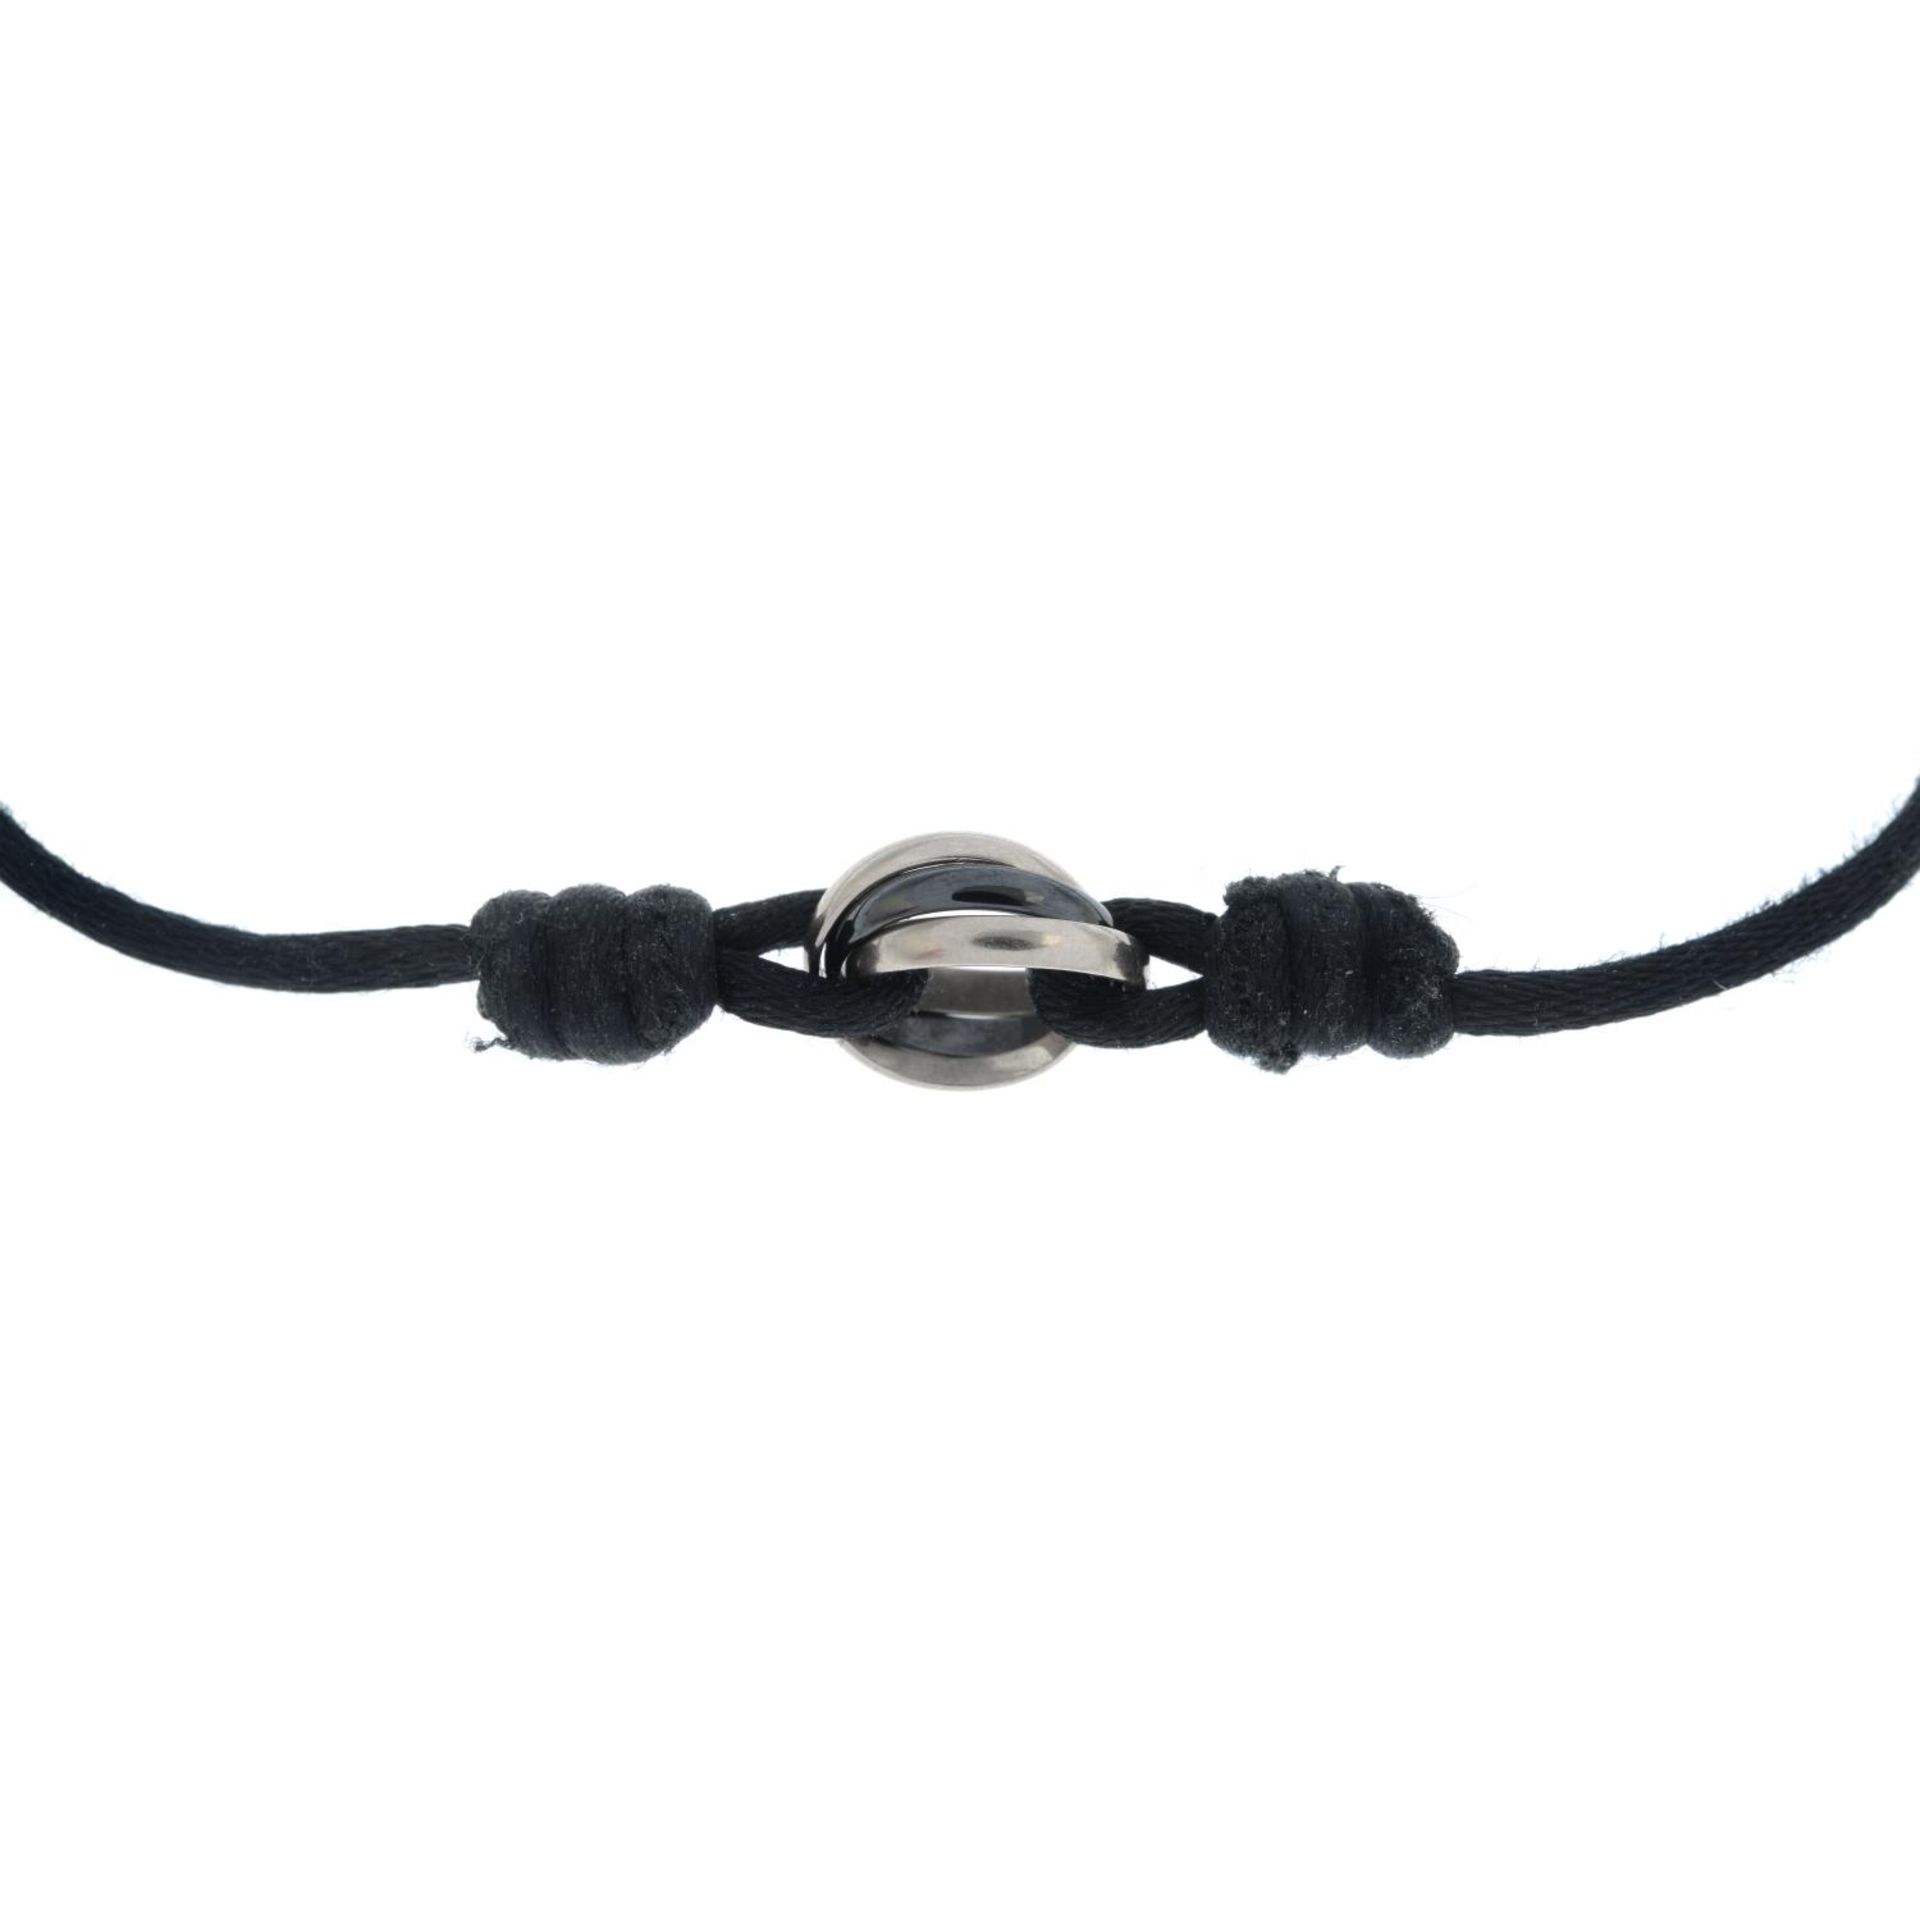 CARTIER - a cord 'Trinity' bracelet. - Image 2 of 3